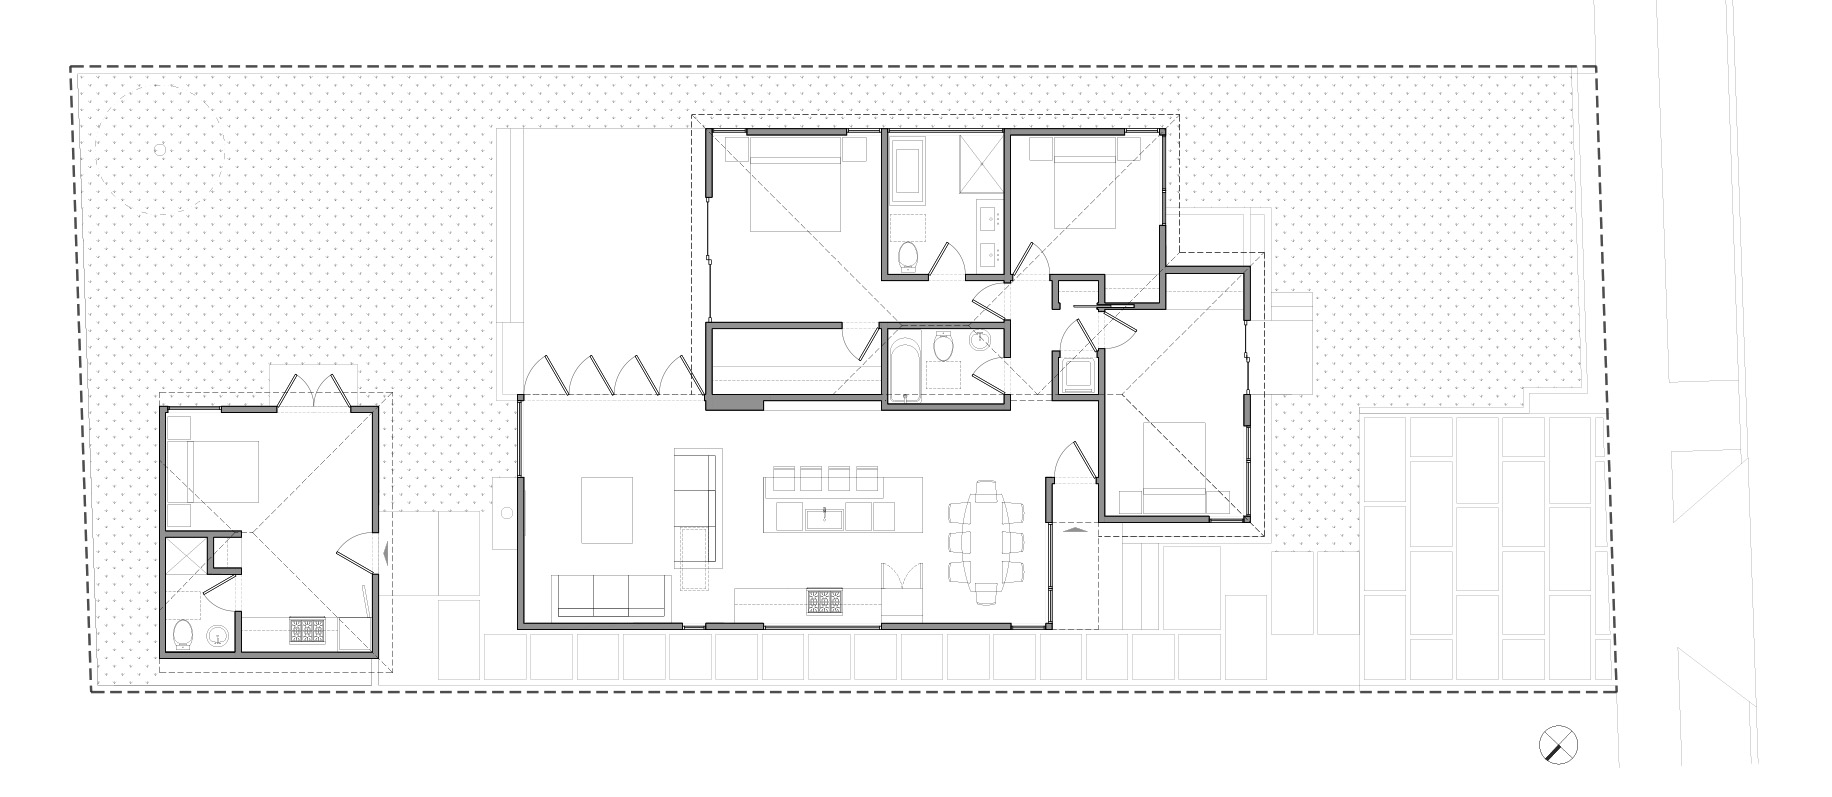 Finished plan of remodel/addition/garage conversion